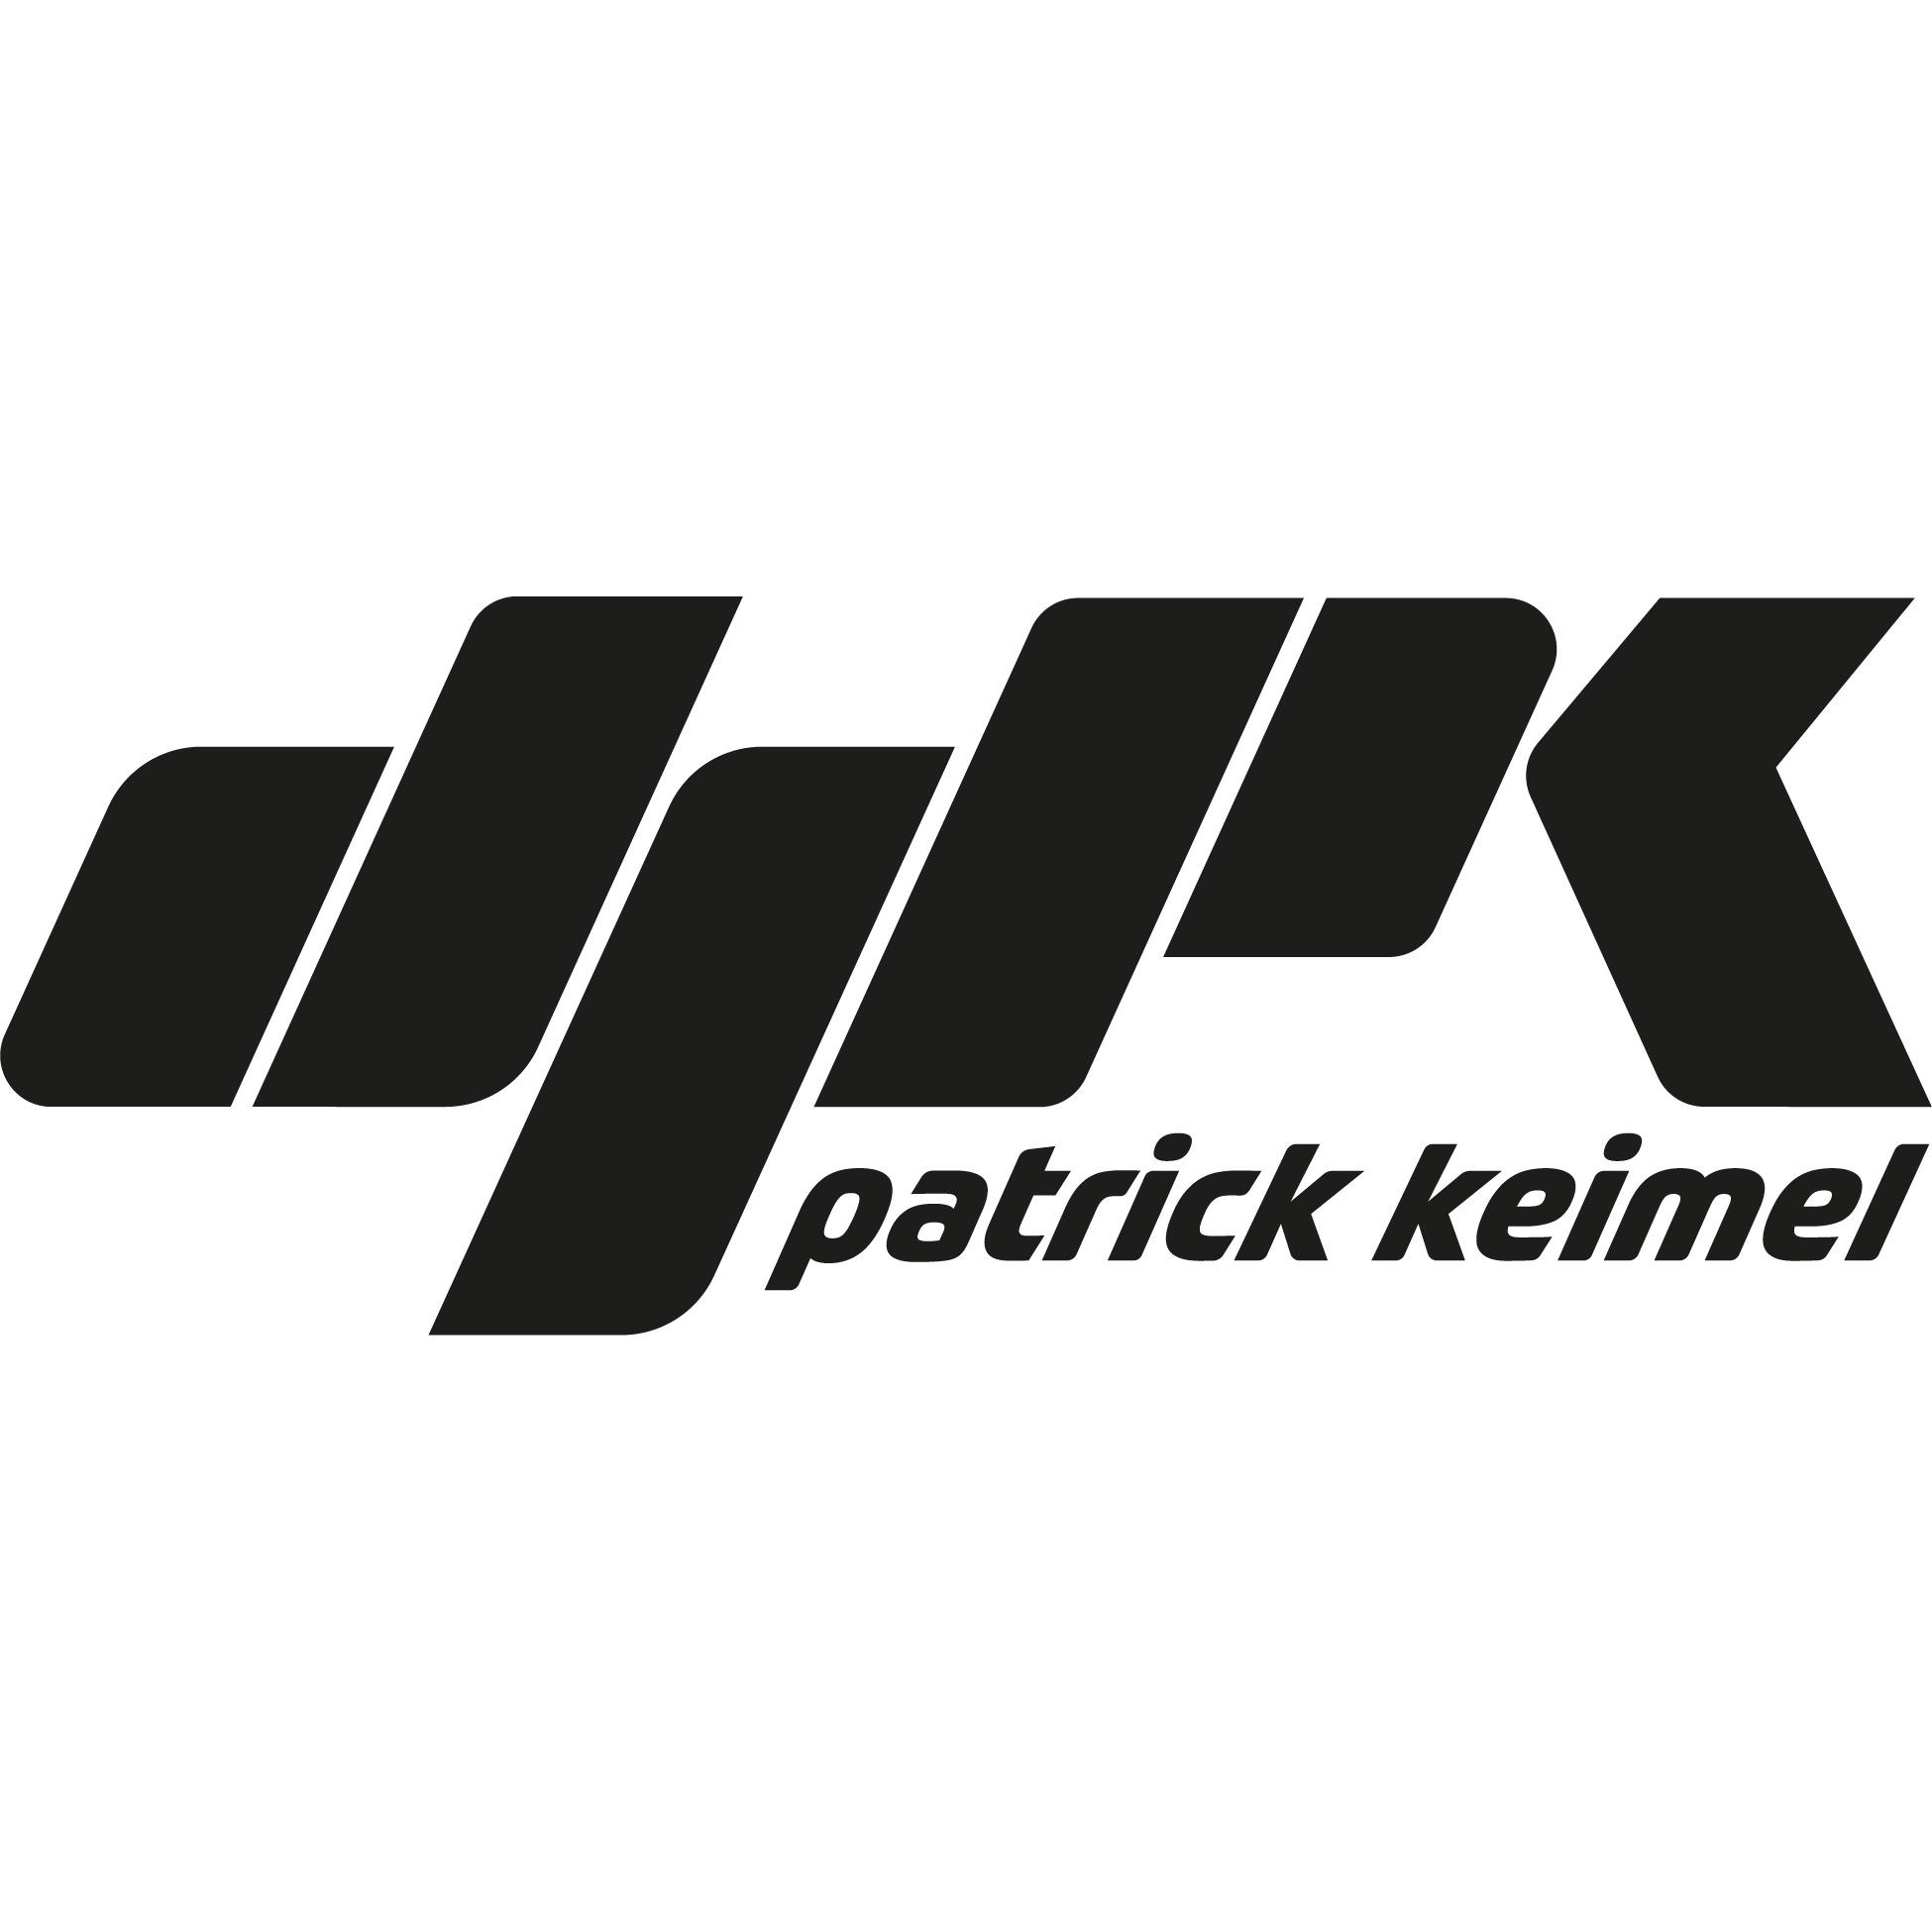 DJ Patrick Keimel - Event Venue - Schwerin - 01525 4643689 Germany | ShowMeLocal.com